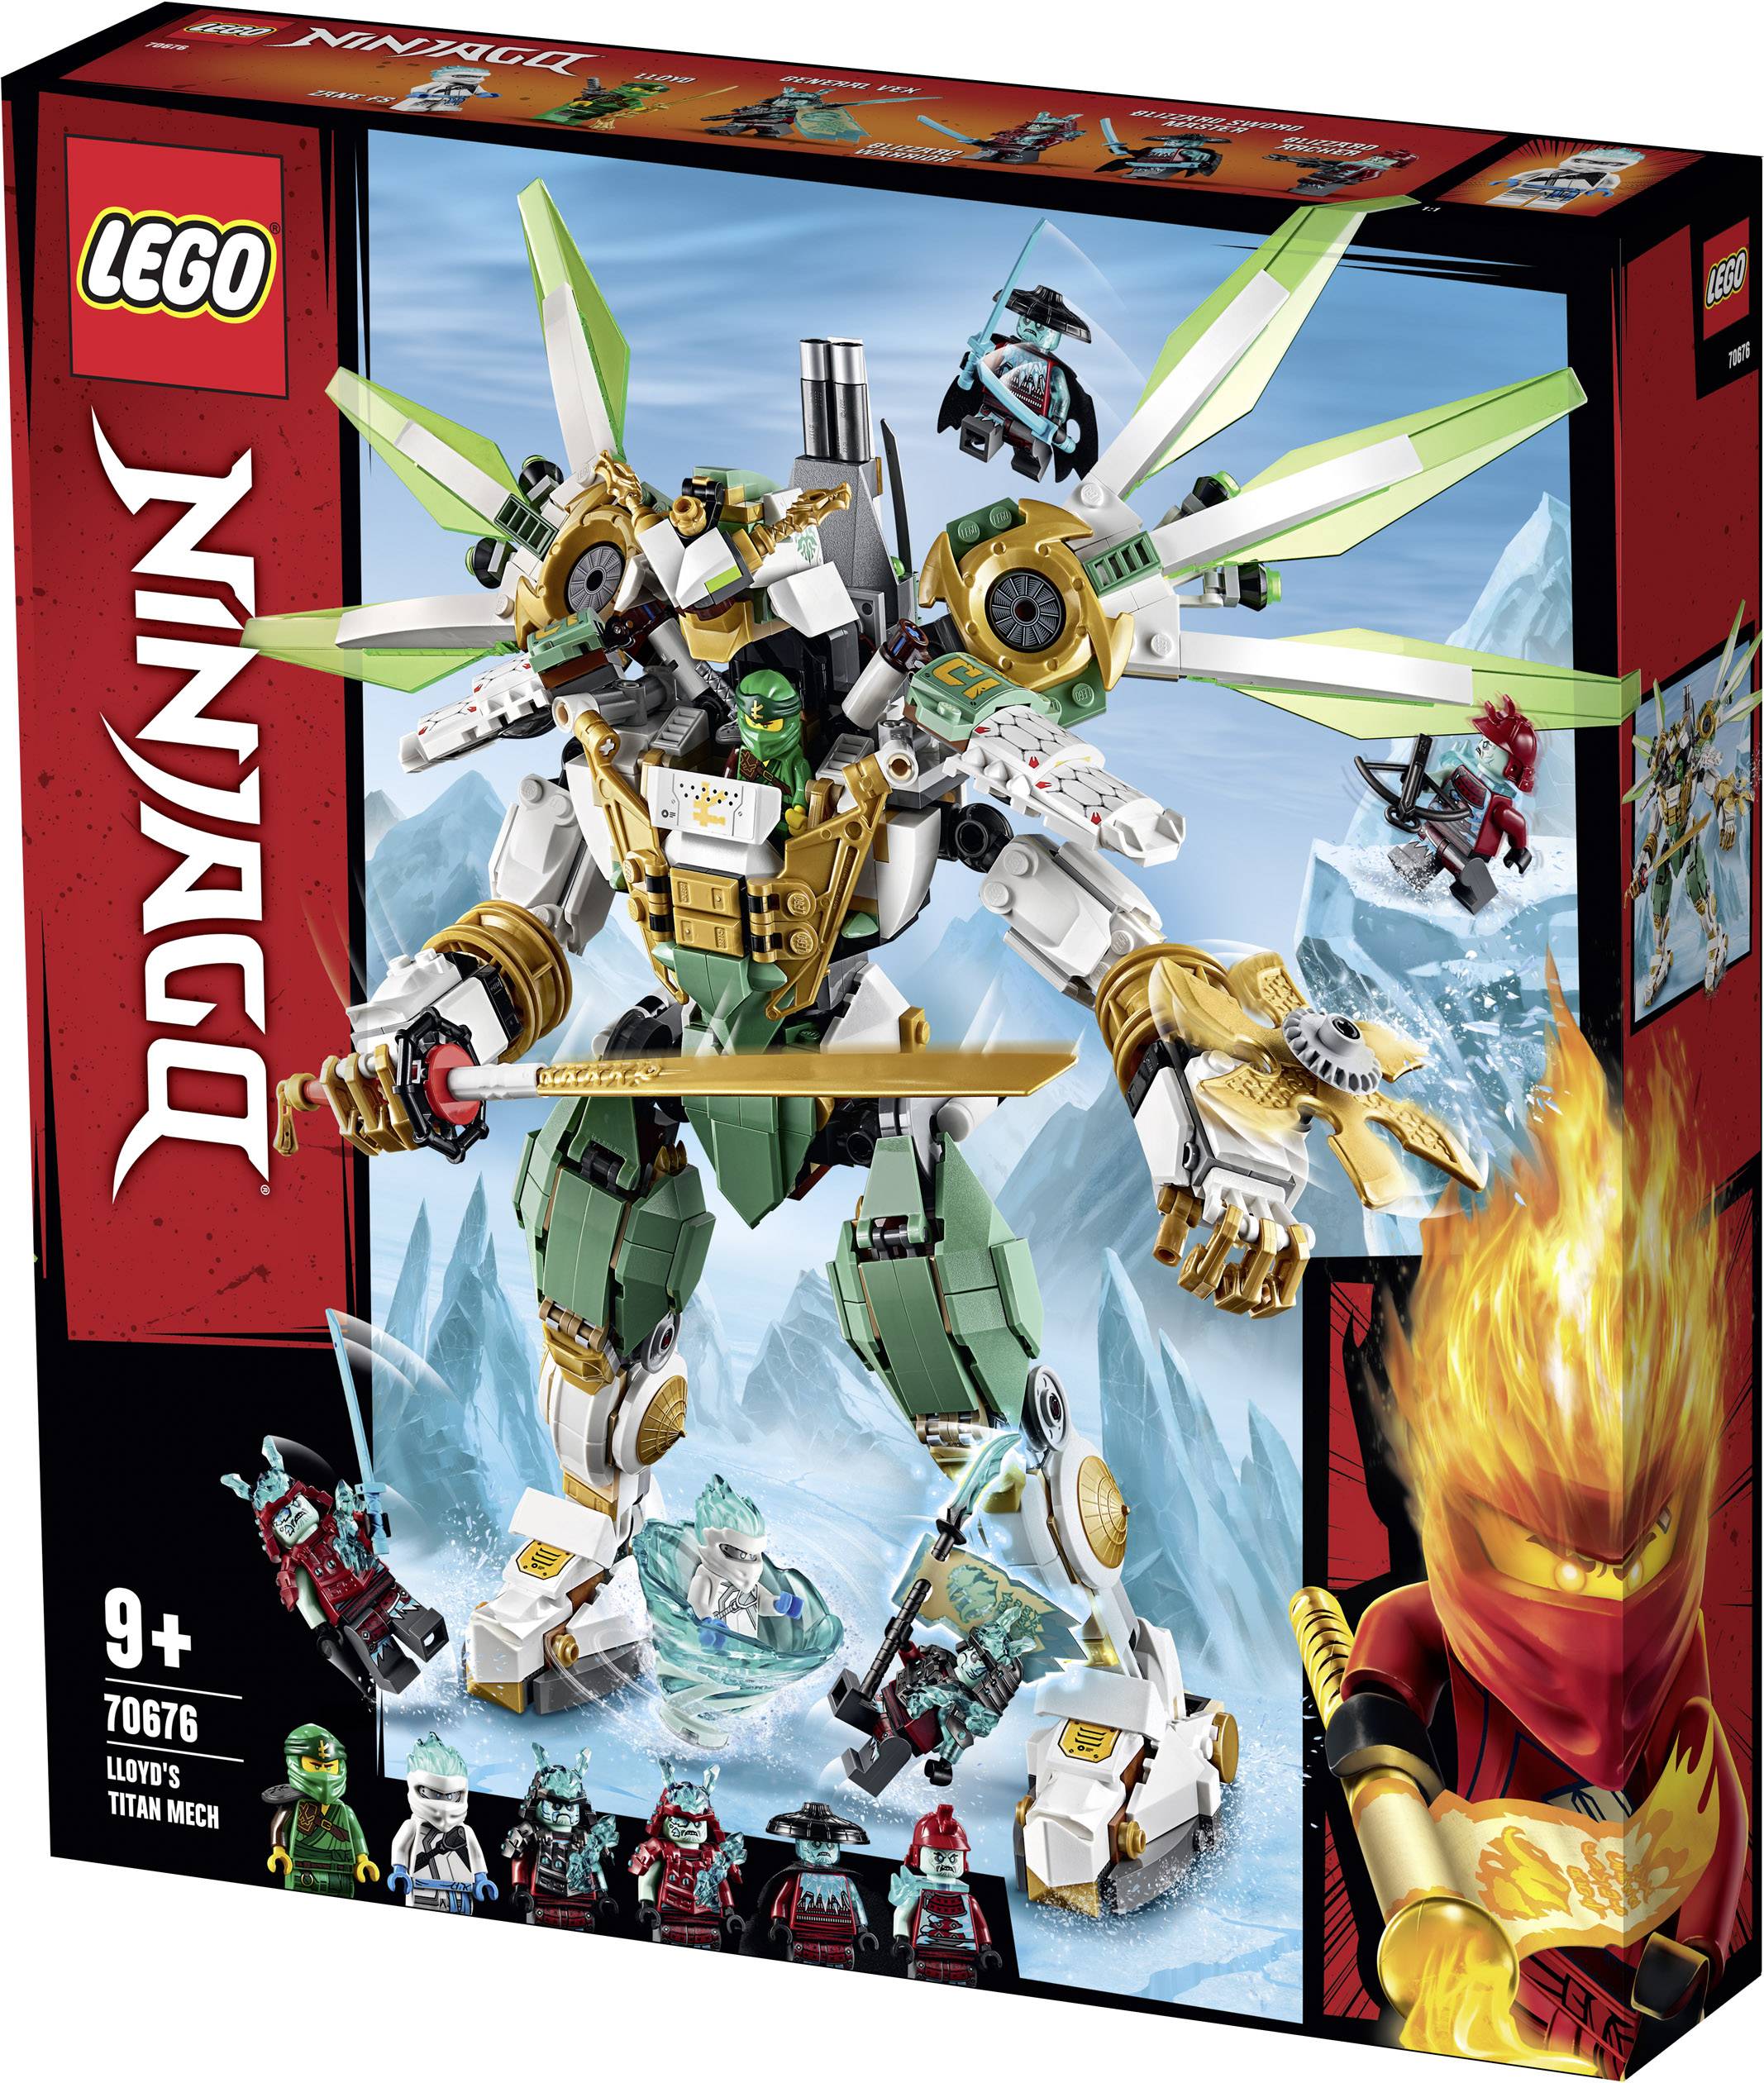 70676 Lego Ninjago Lloyds Titan Mech Conrad Com